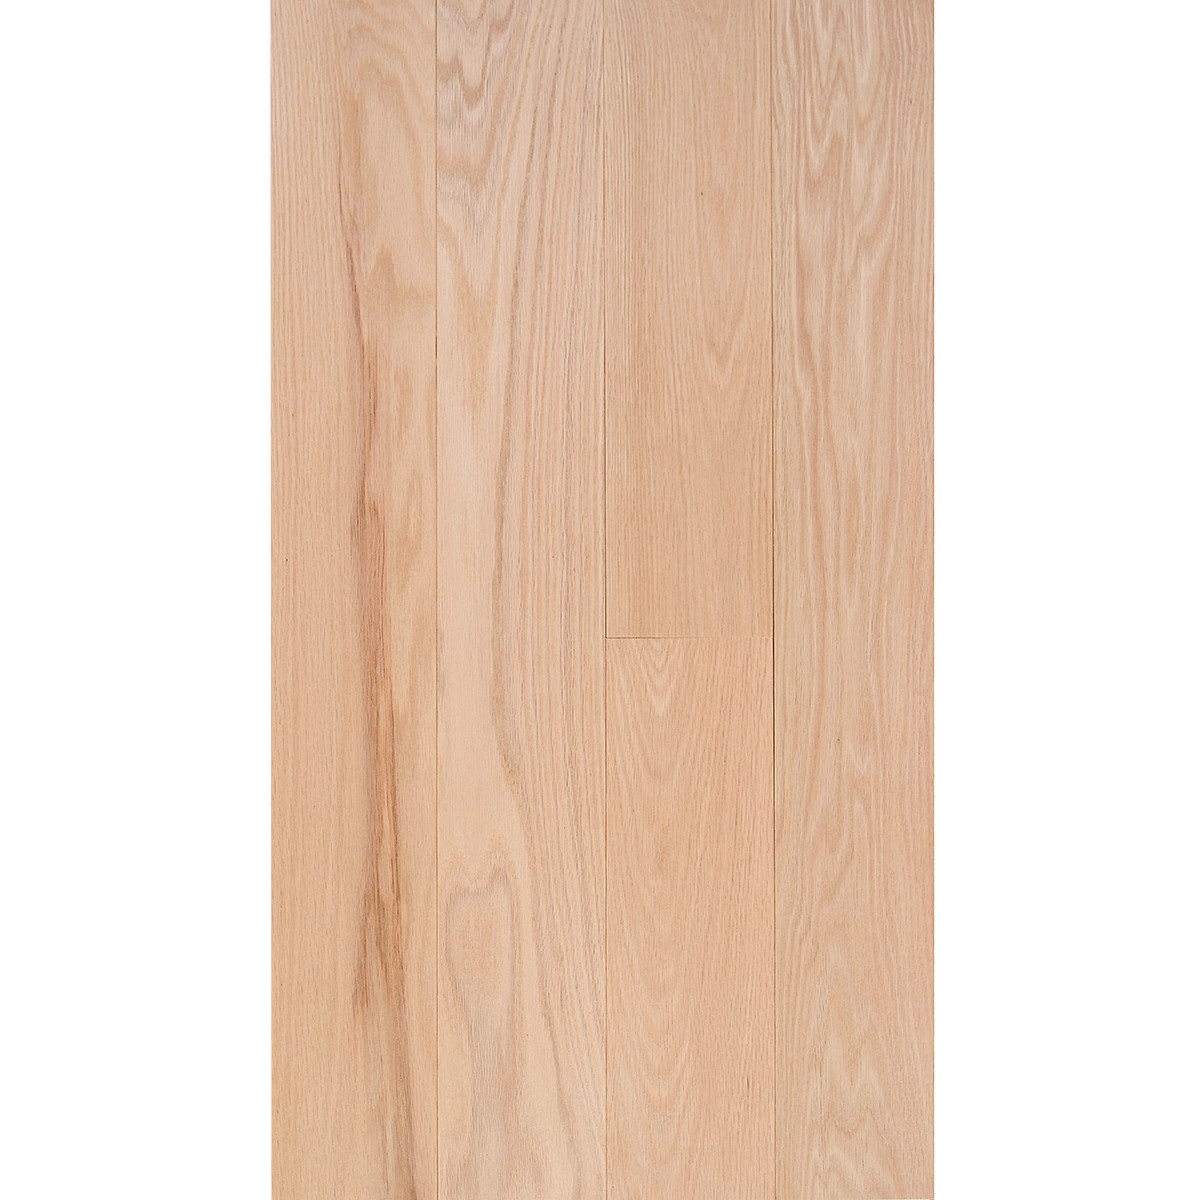 15 Awesome 3 4 Vs 1 2 Inch Engineered Hardwood Flooring 2024 free download 3 4 vs 1 2 inch engineered hardwood flooring of red oak 3 4 x 5 select grade flooring regarding fs 5 redoak select em flooring